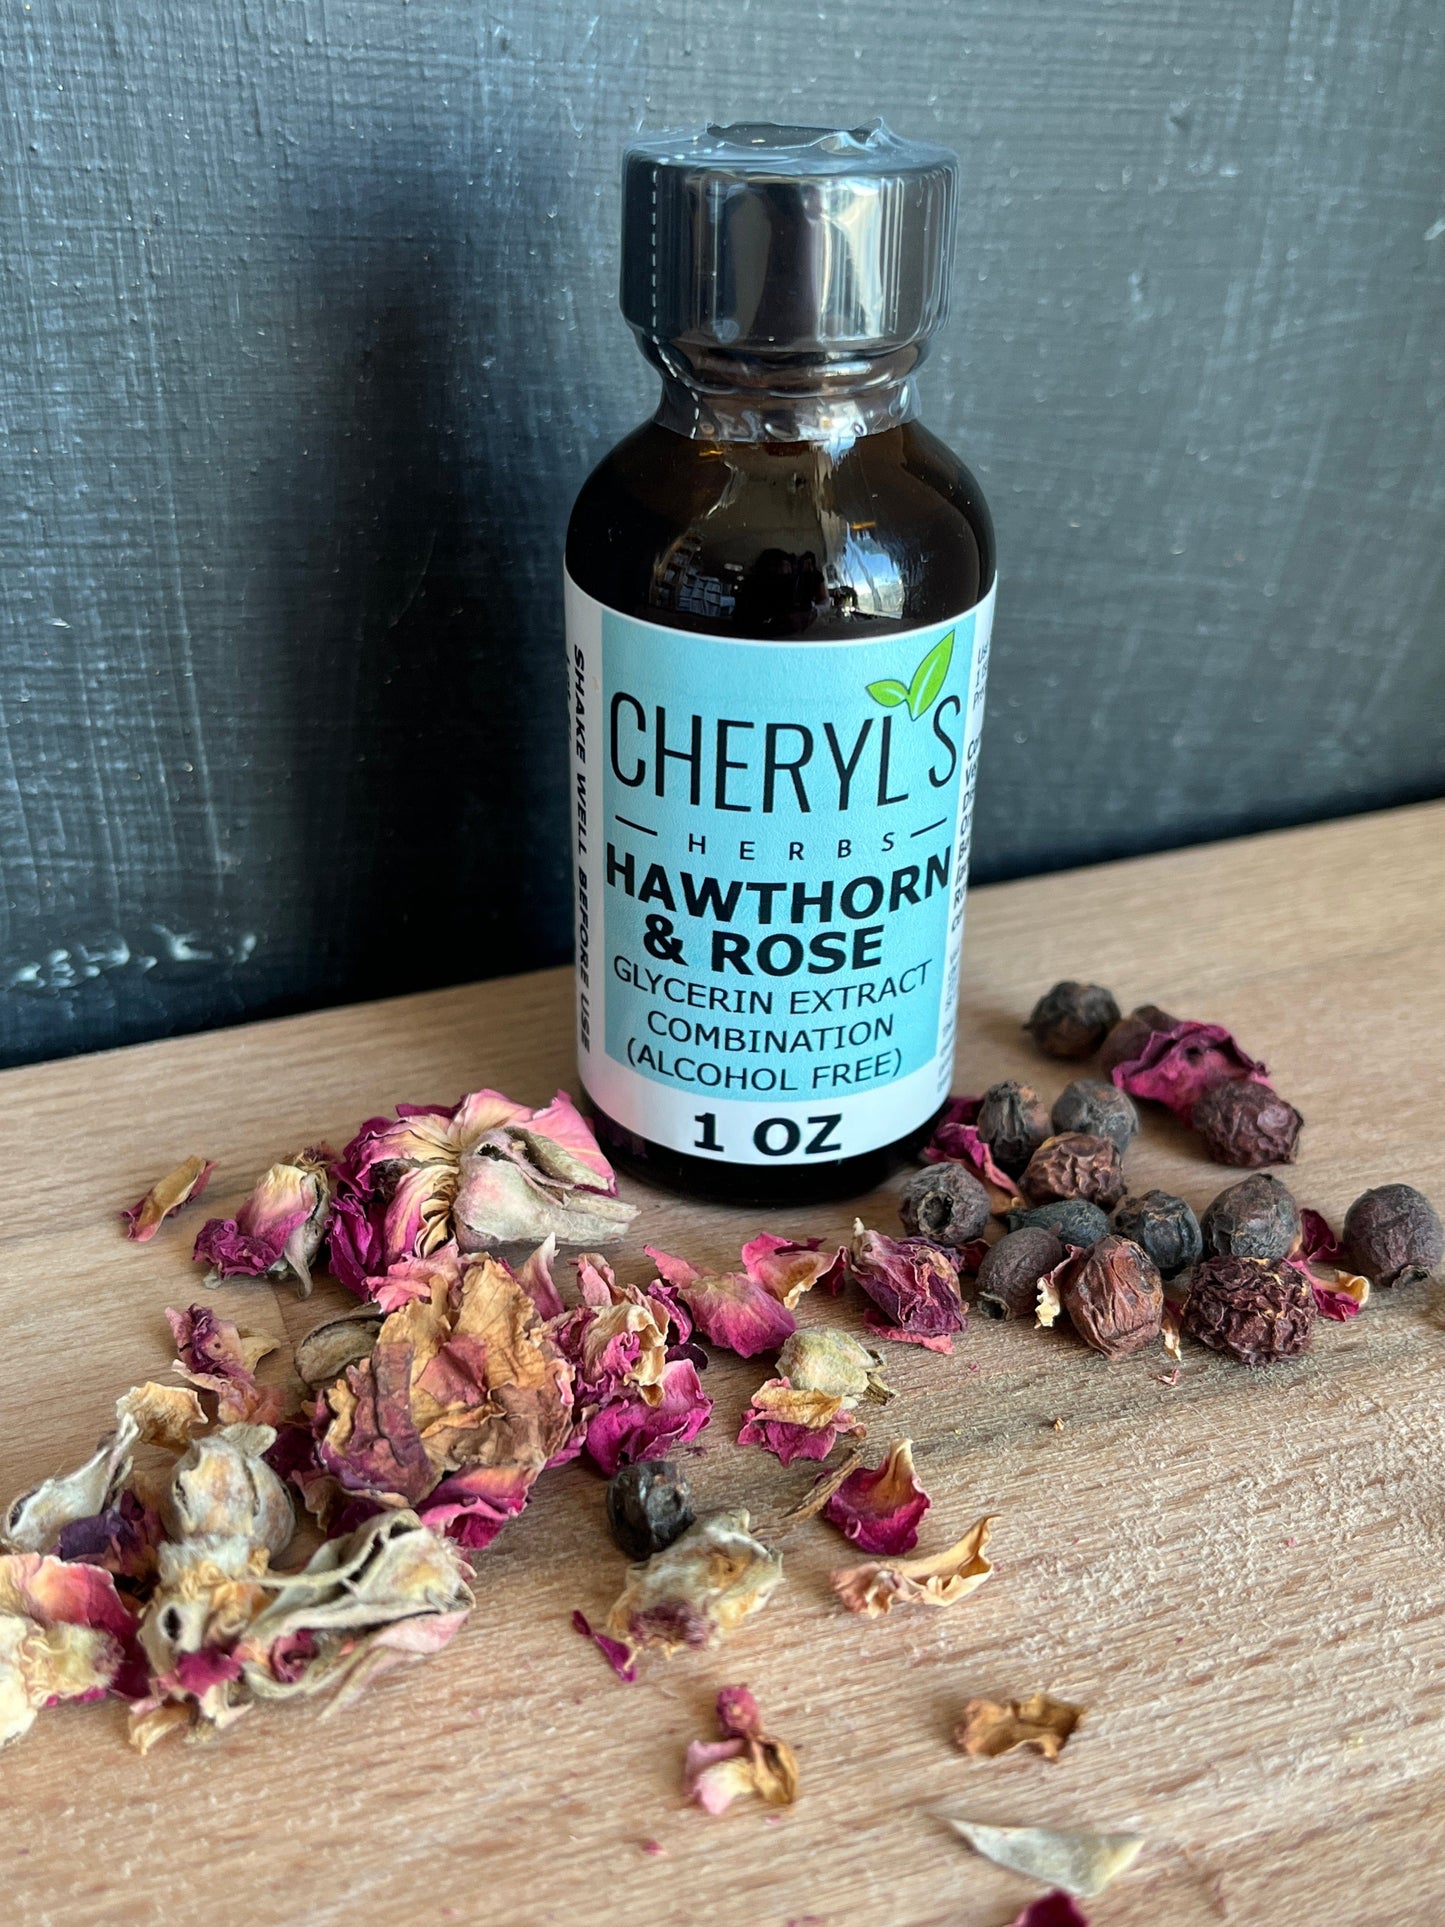 HAWTHORN ROSE GLYCERIN EXTRACT COMBINATION - Cheryls Herbs